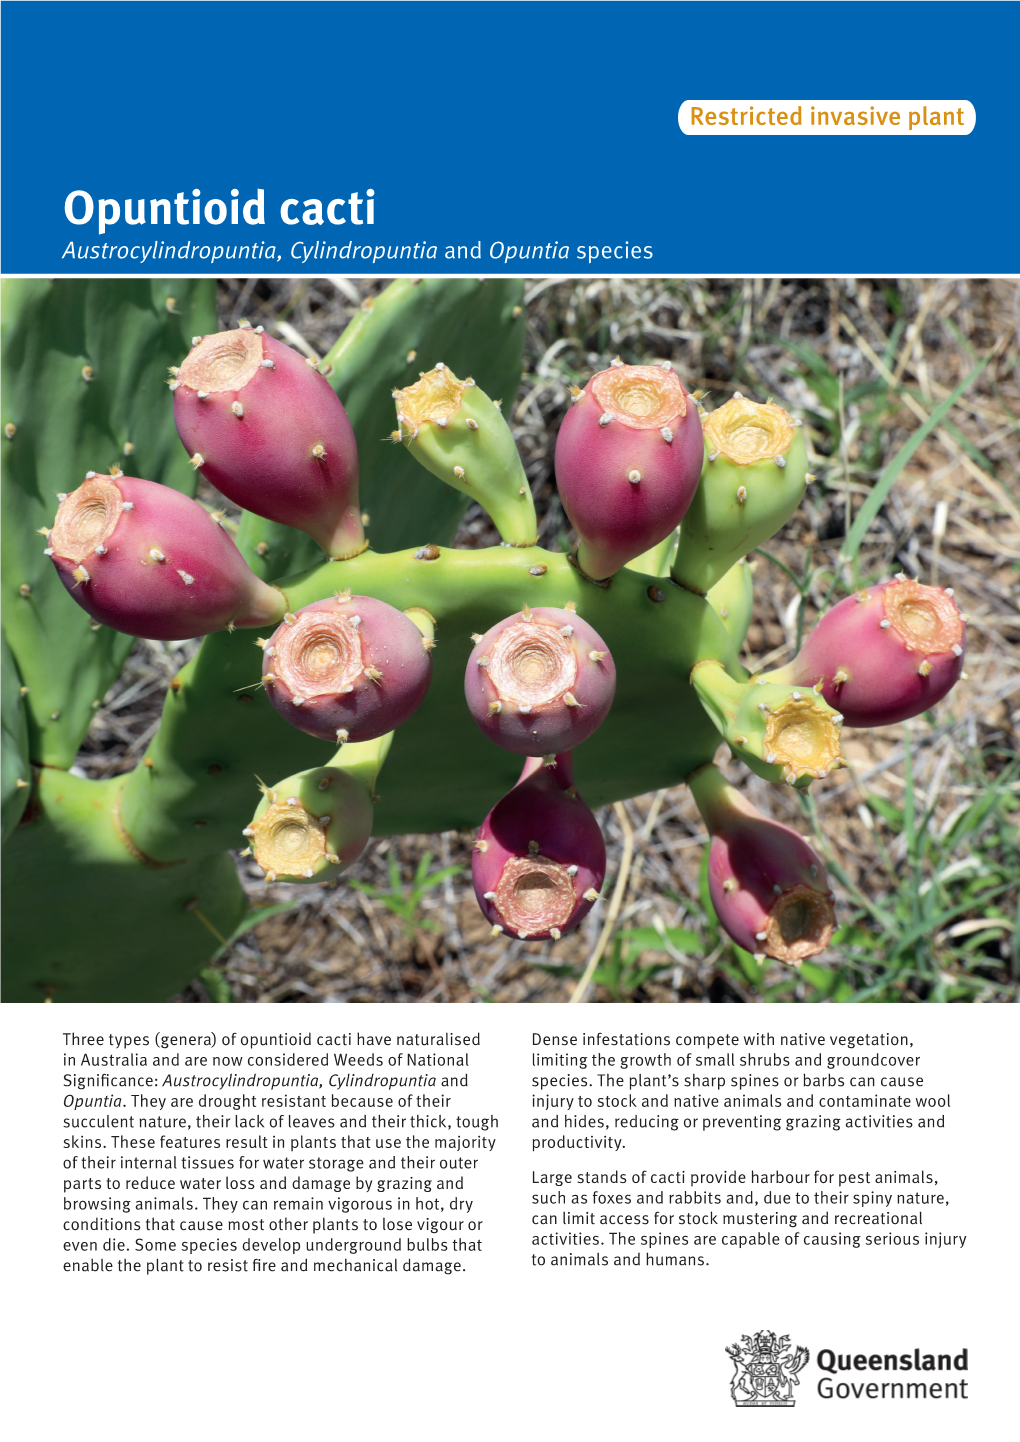 Opuntioid Cacti